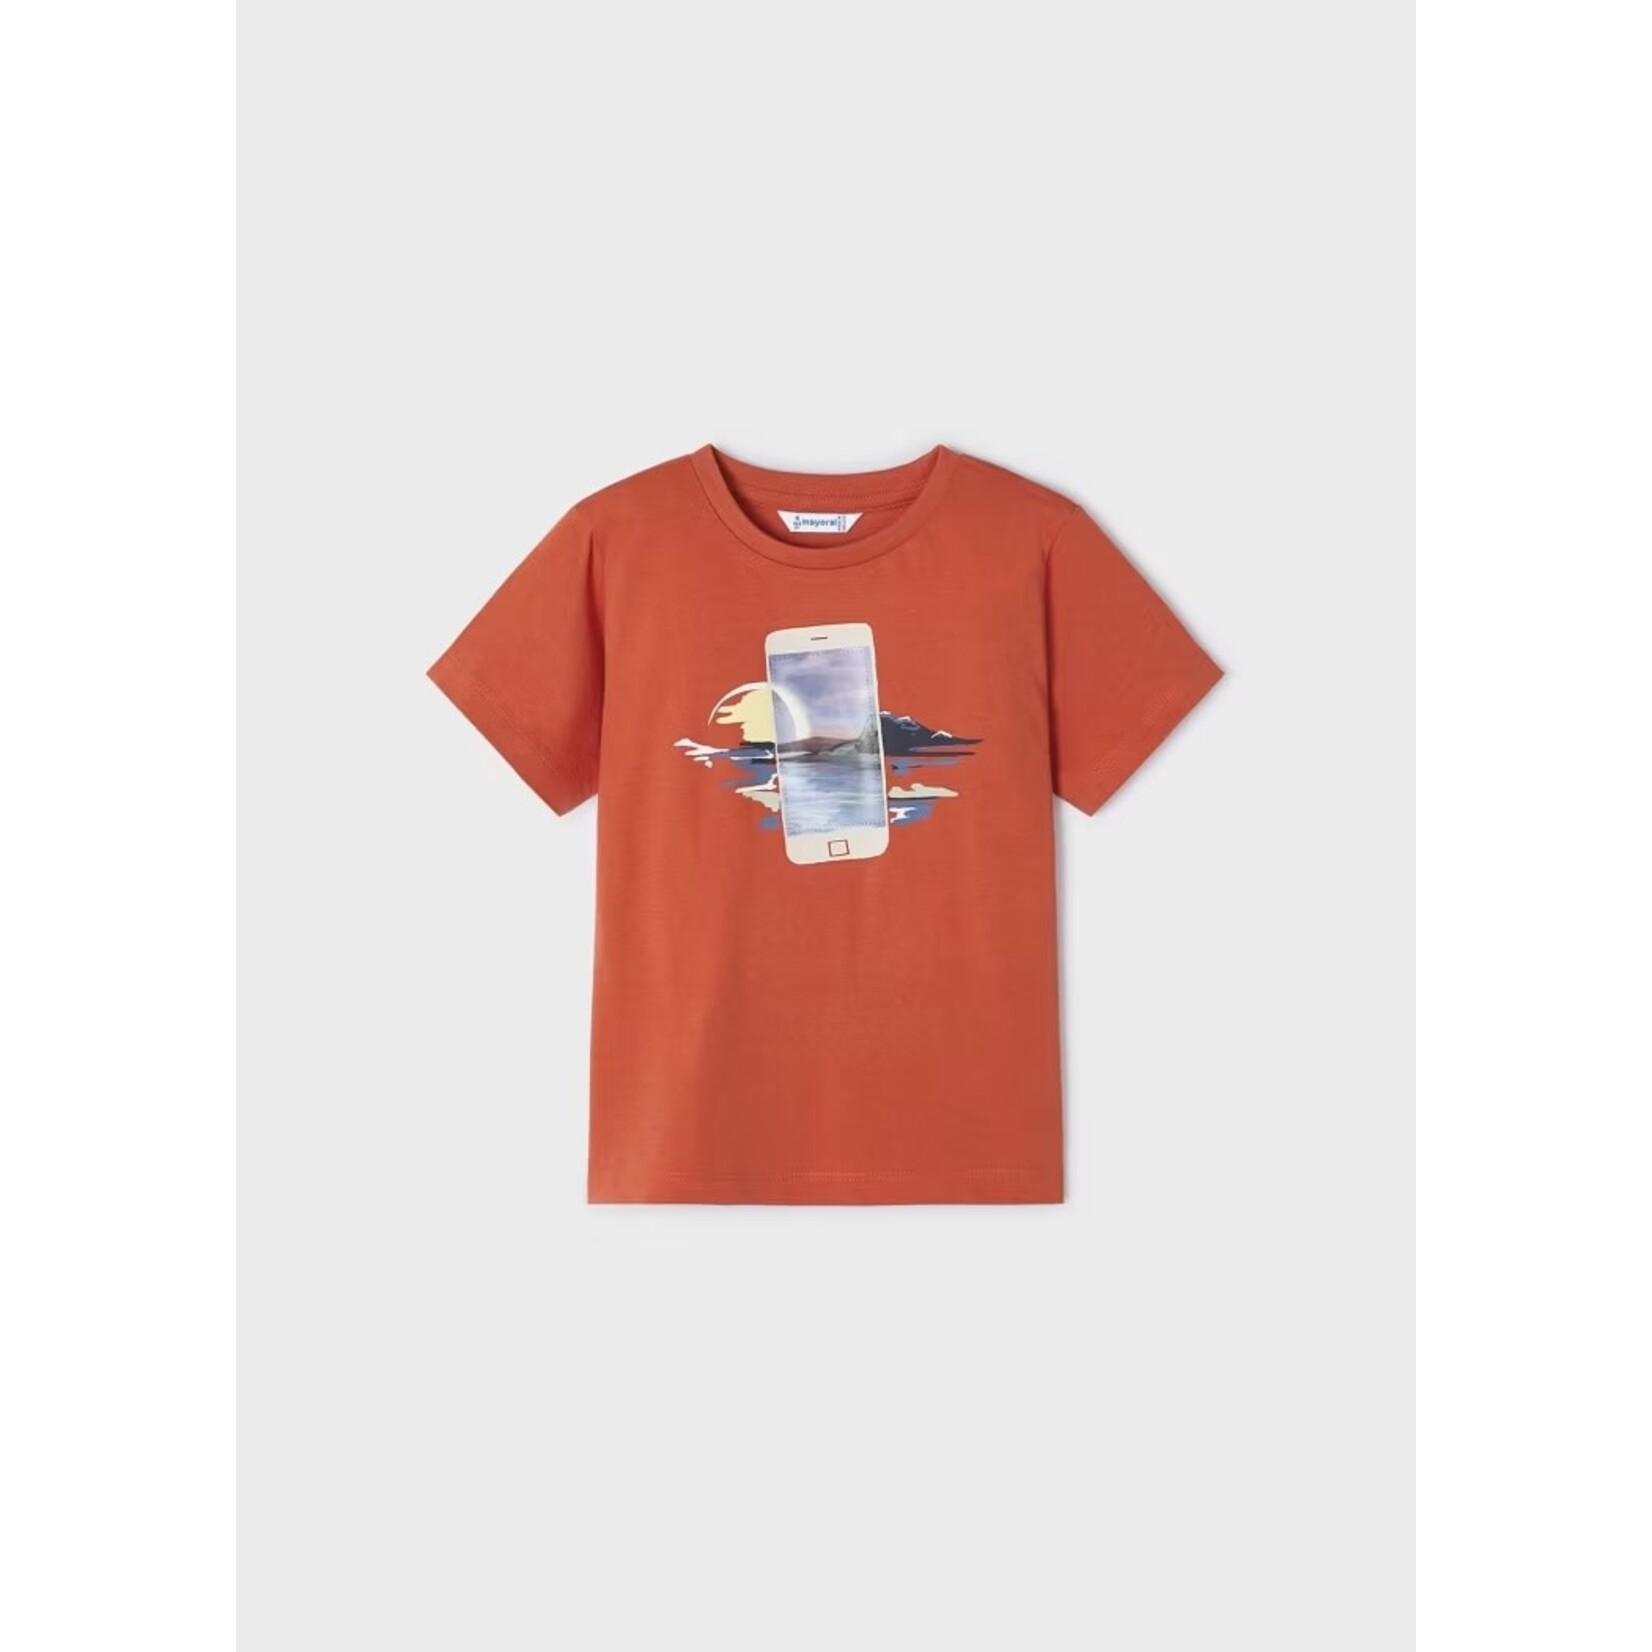 Mayoral MAYORAL - Orange-red short-sleeved t-shirt with landscape photography print